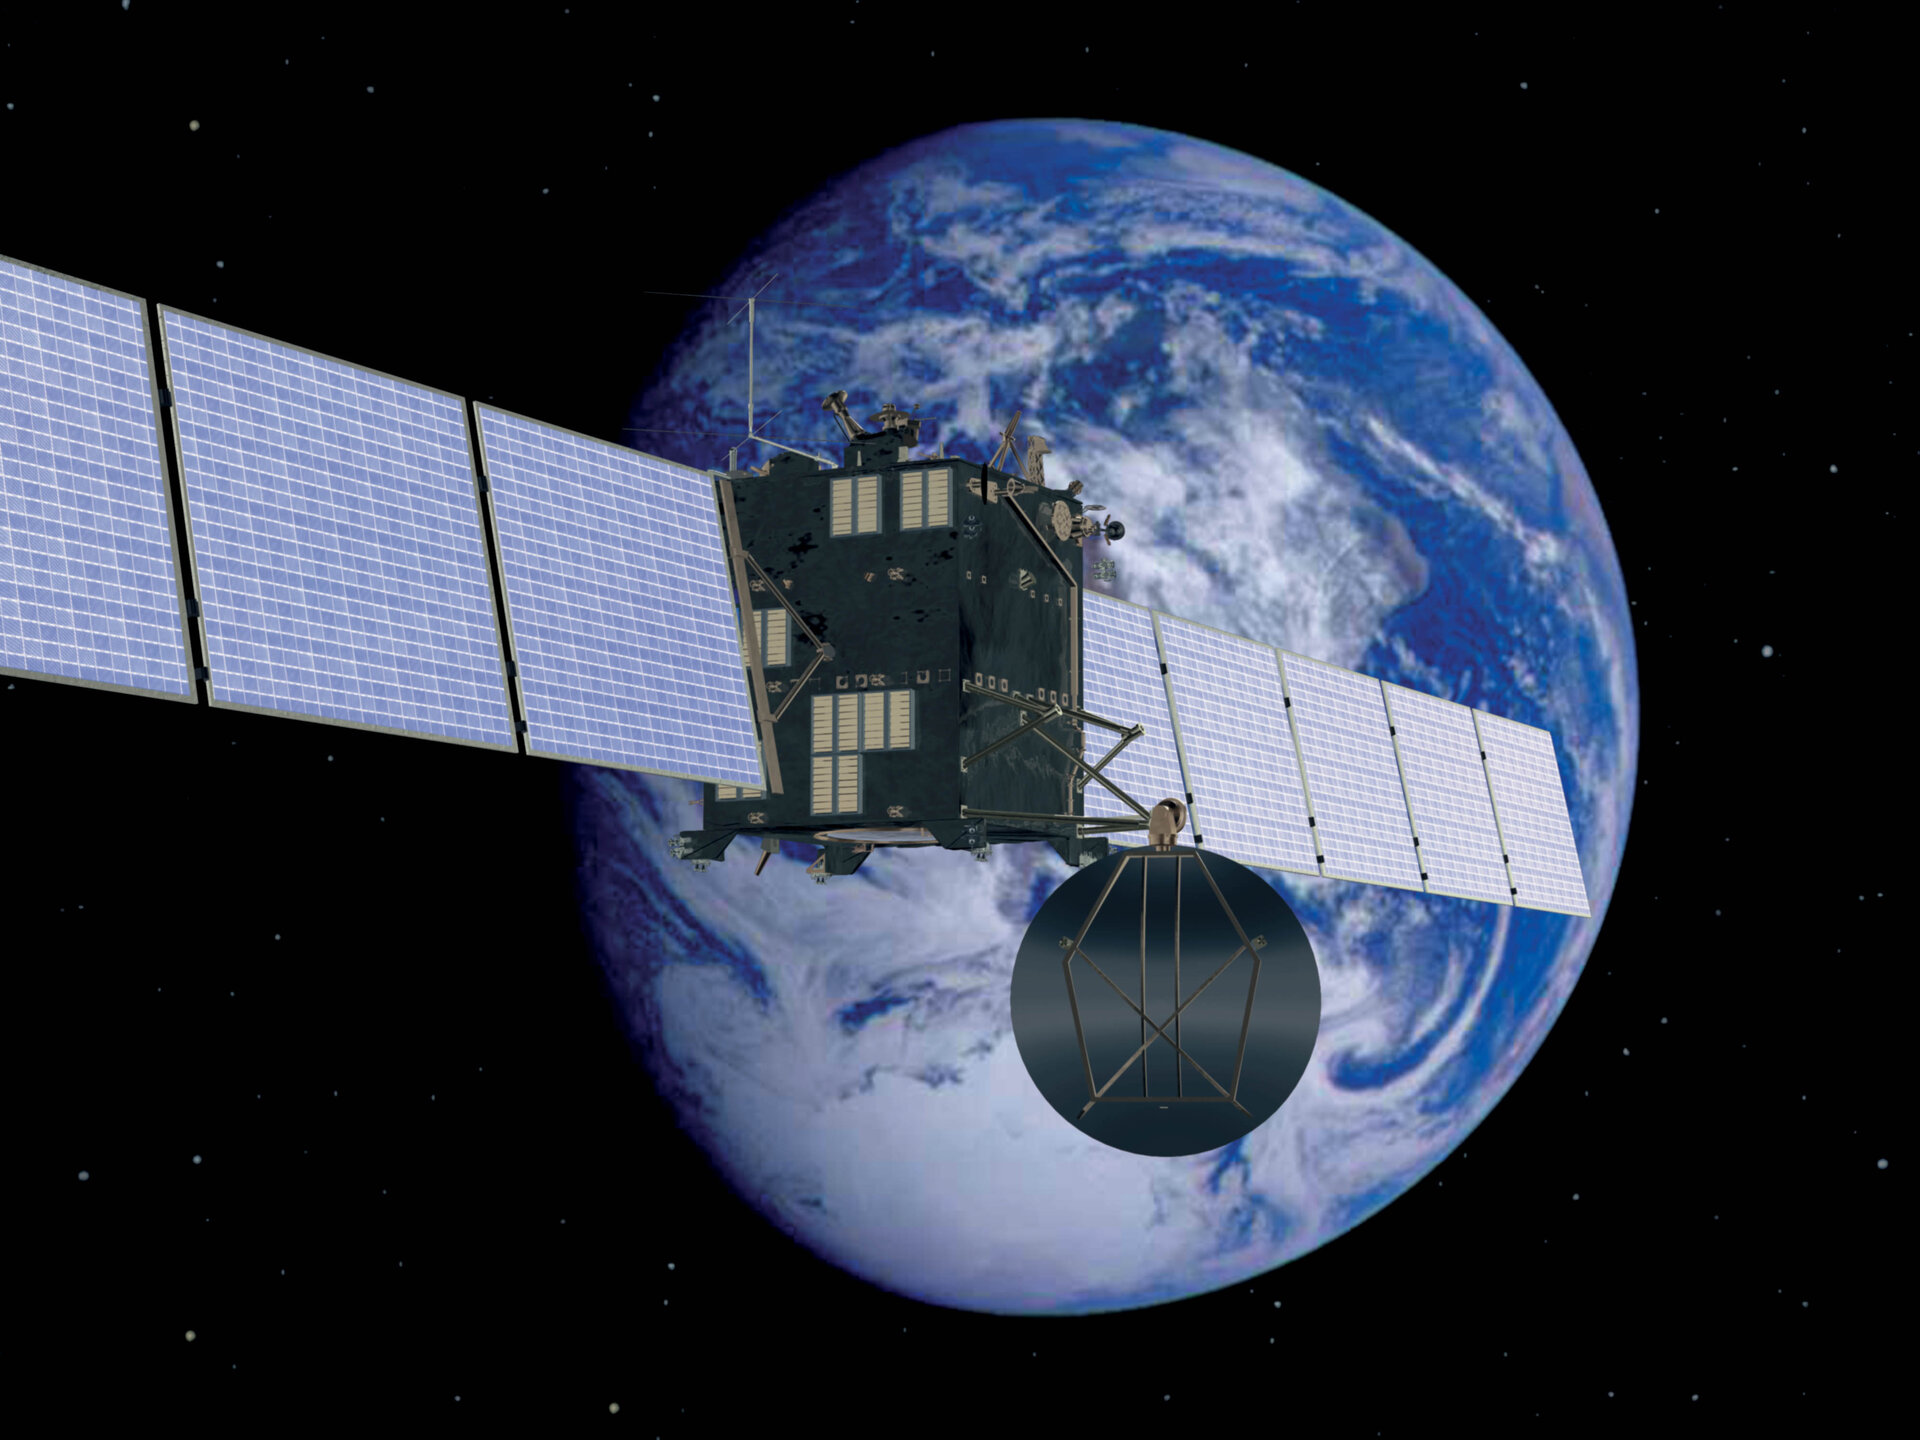 Rosetta sera lancée le 26 février